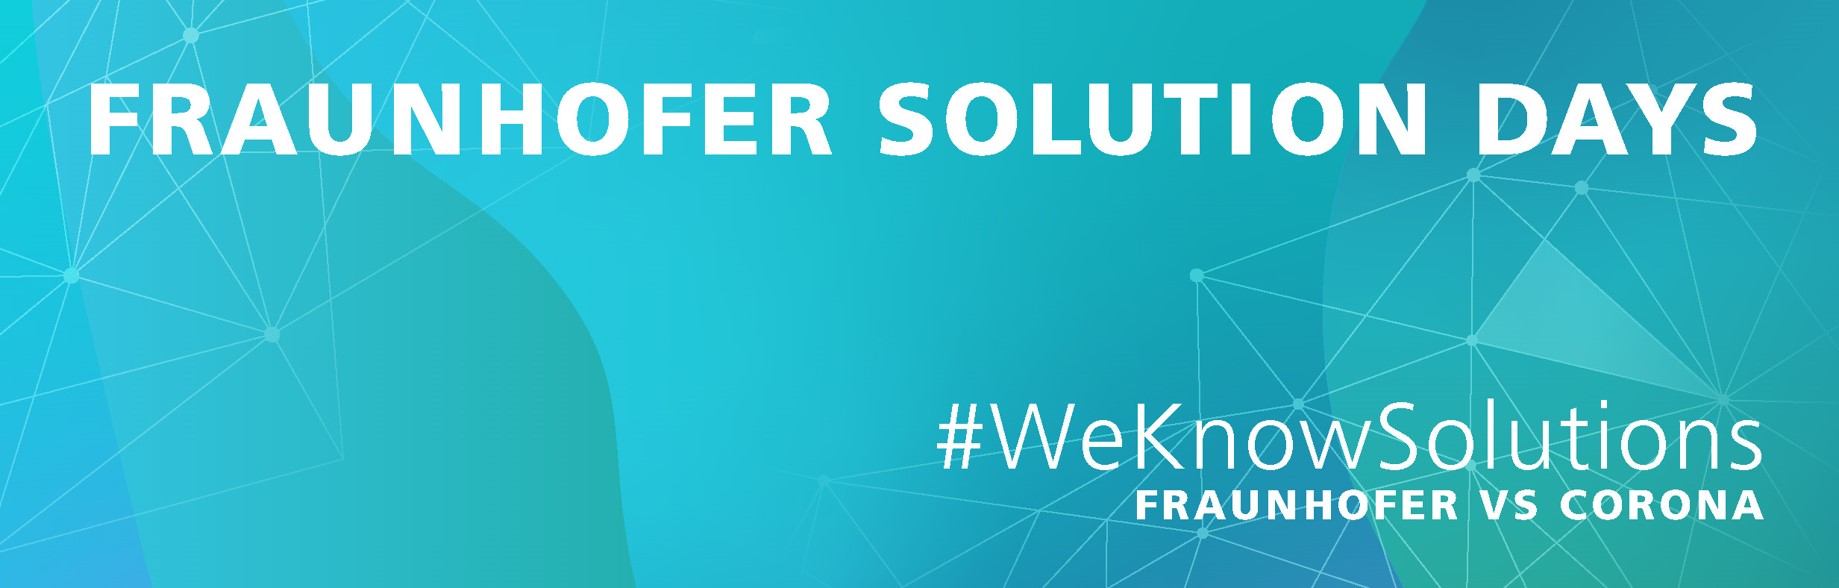 Banner Fraunhofer Solution Days